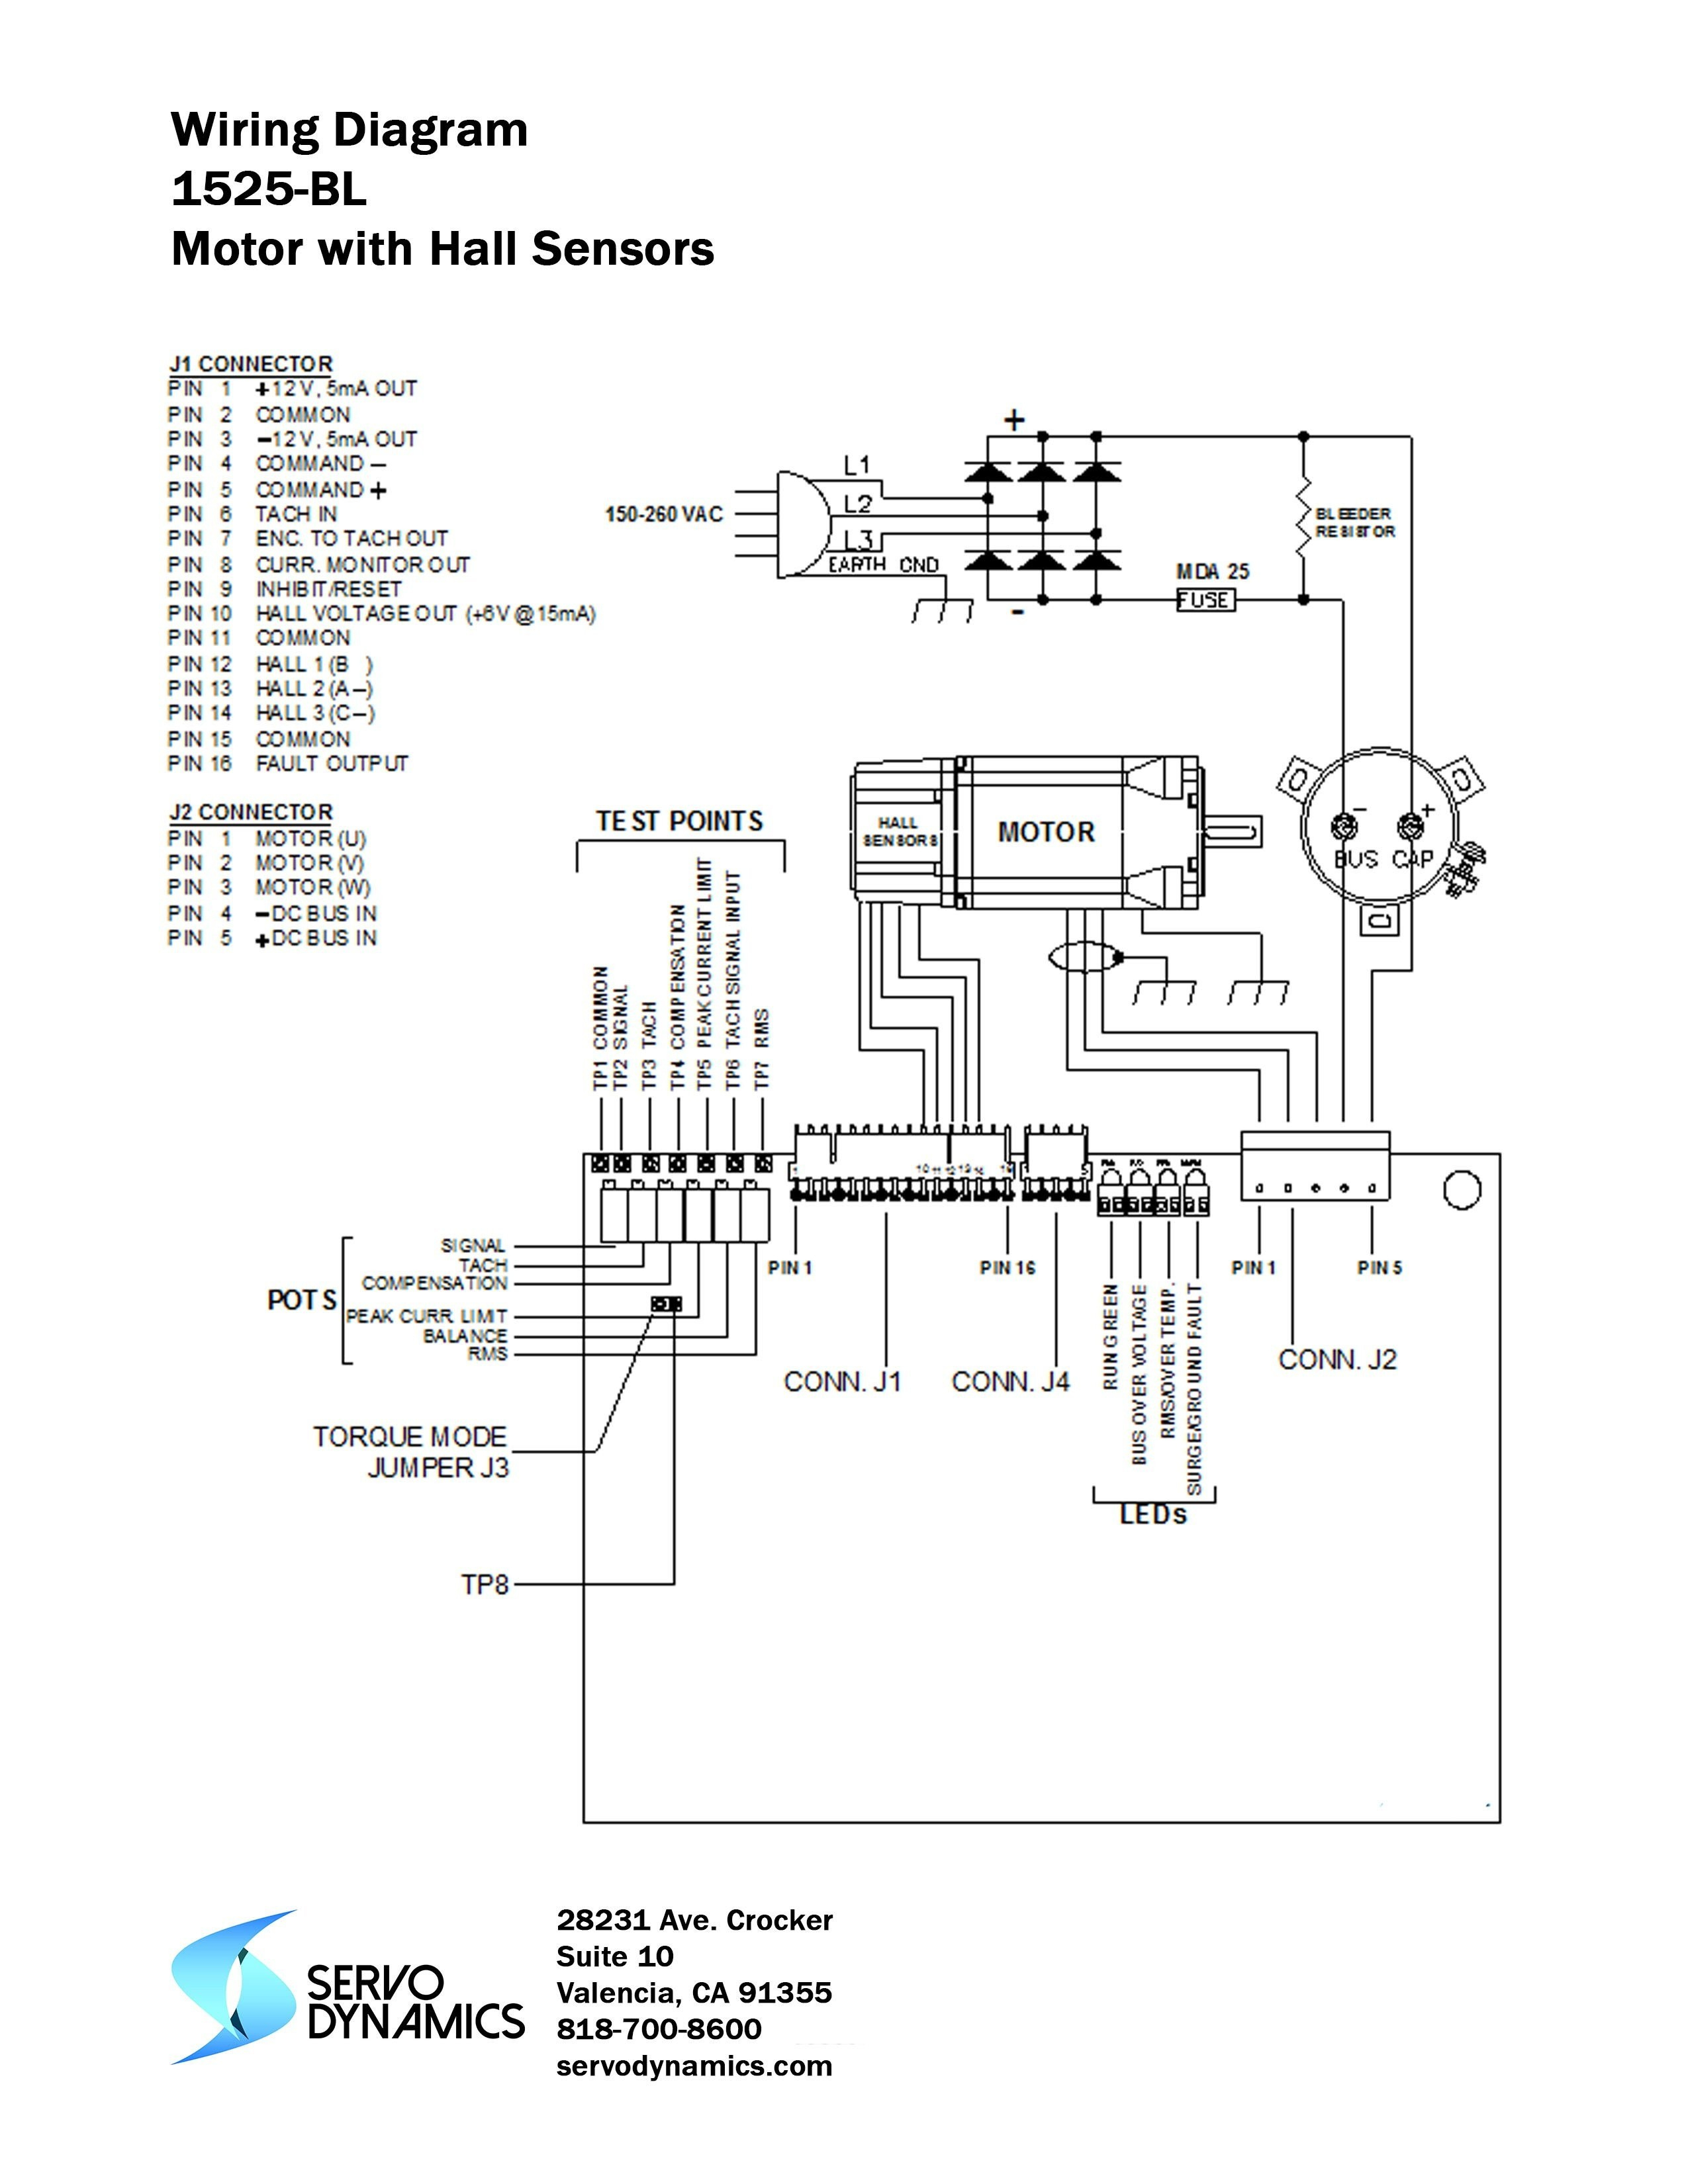 Wiring Diagram Ecm Carrier - Wiring Diagram And Schematics - Ecm Motor Wiring Diagram